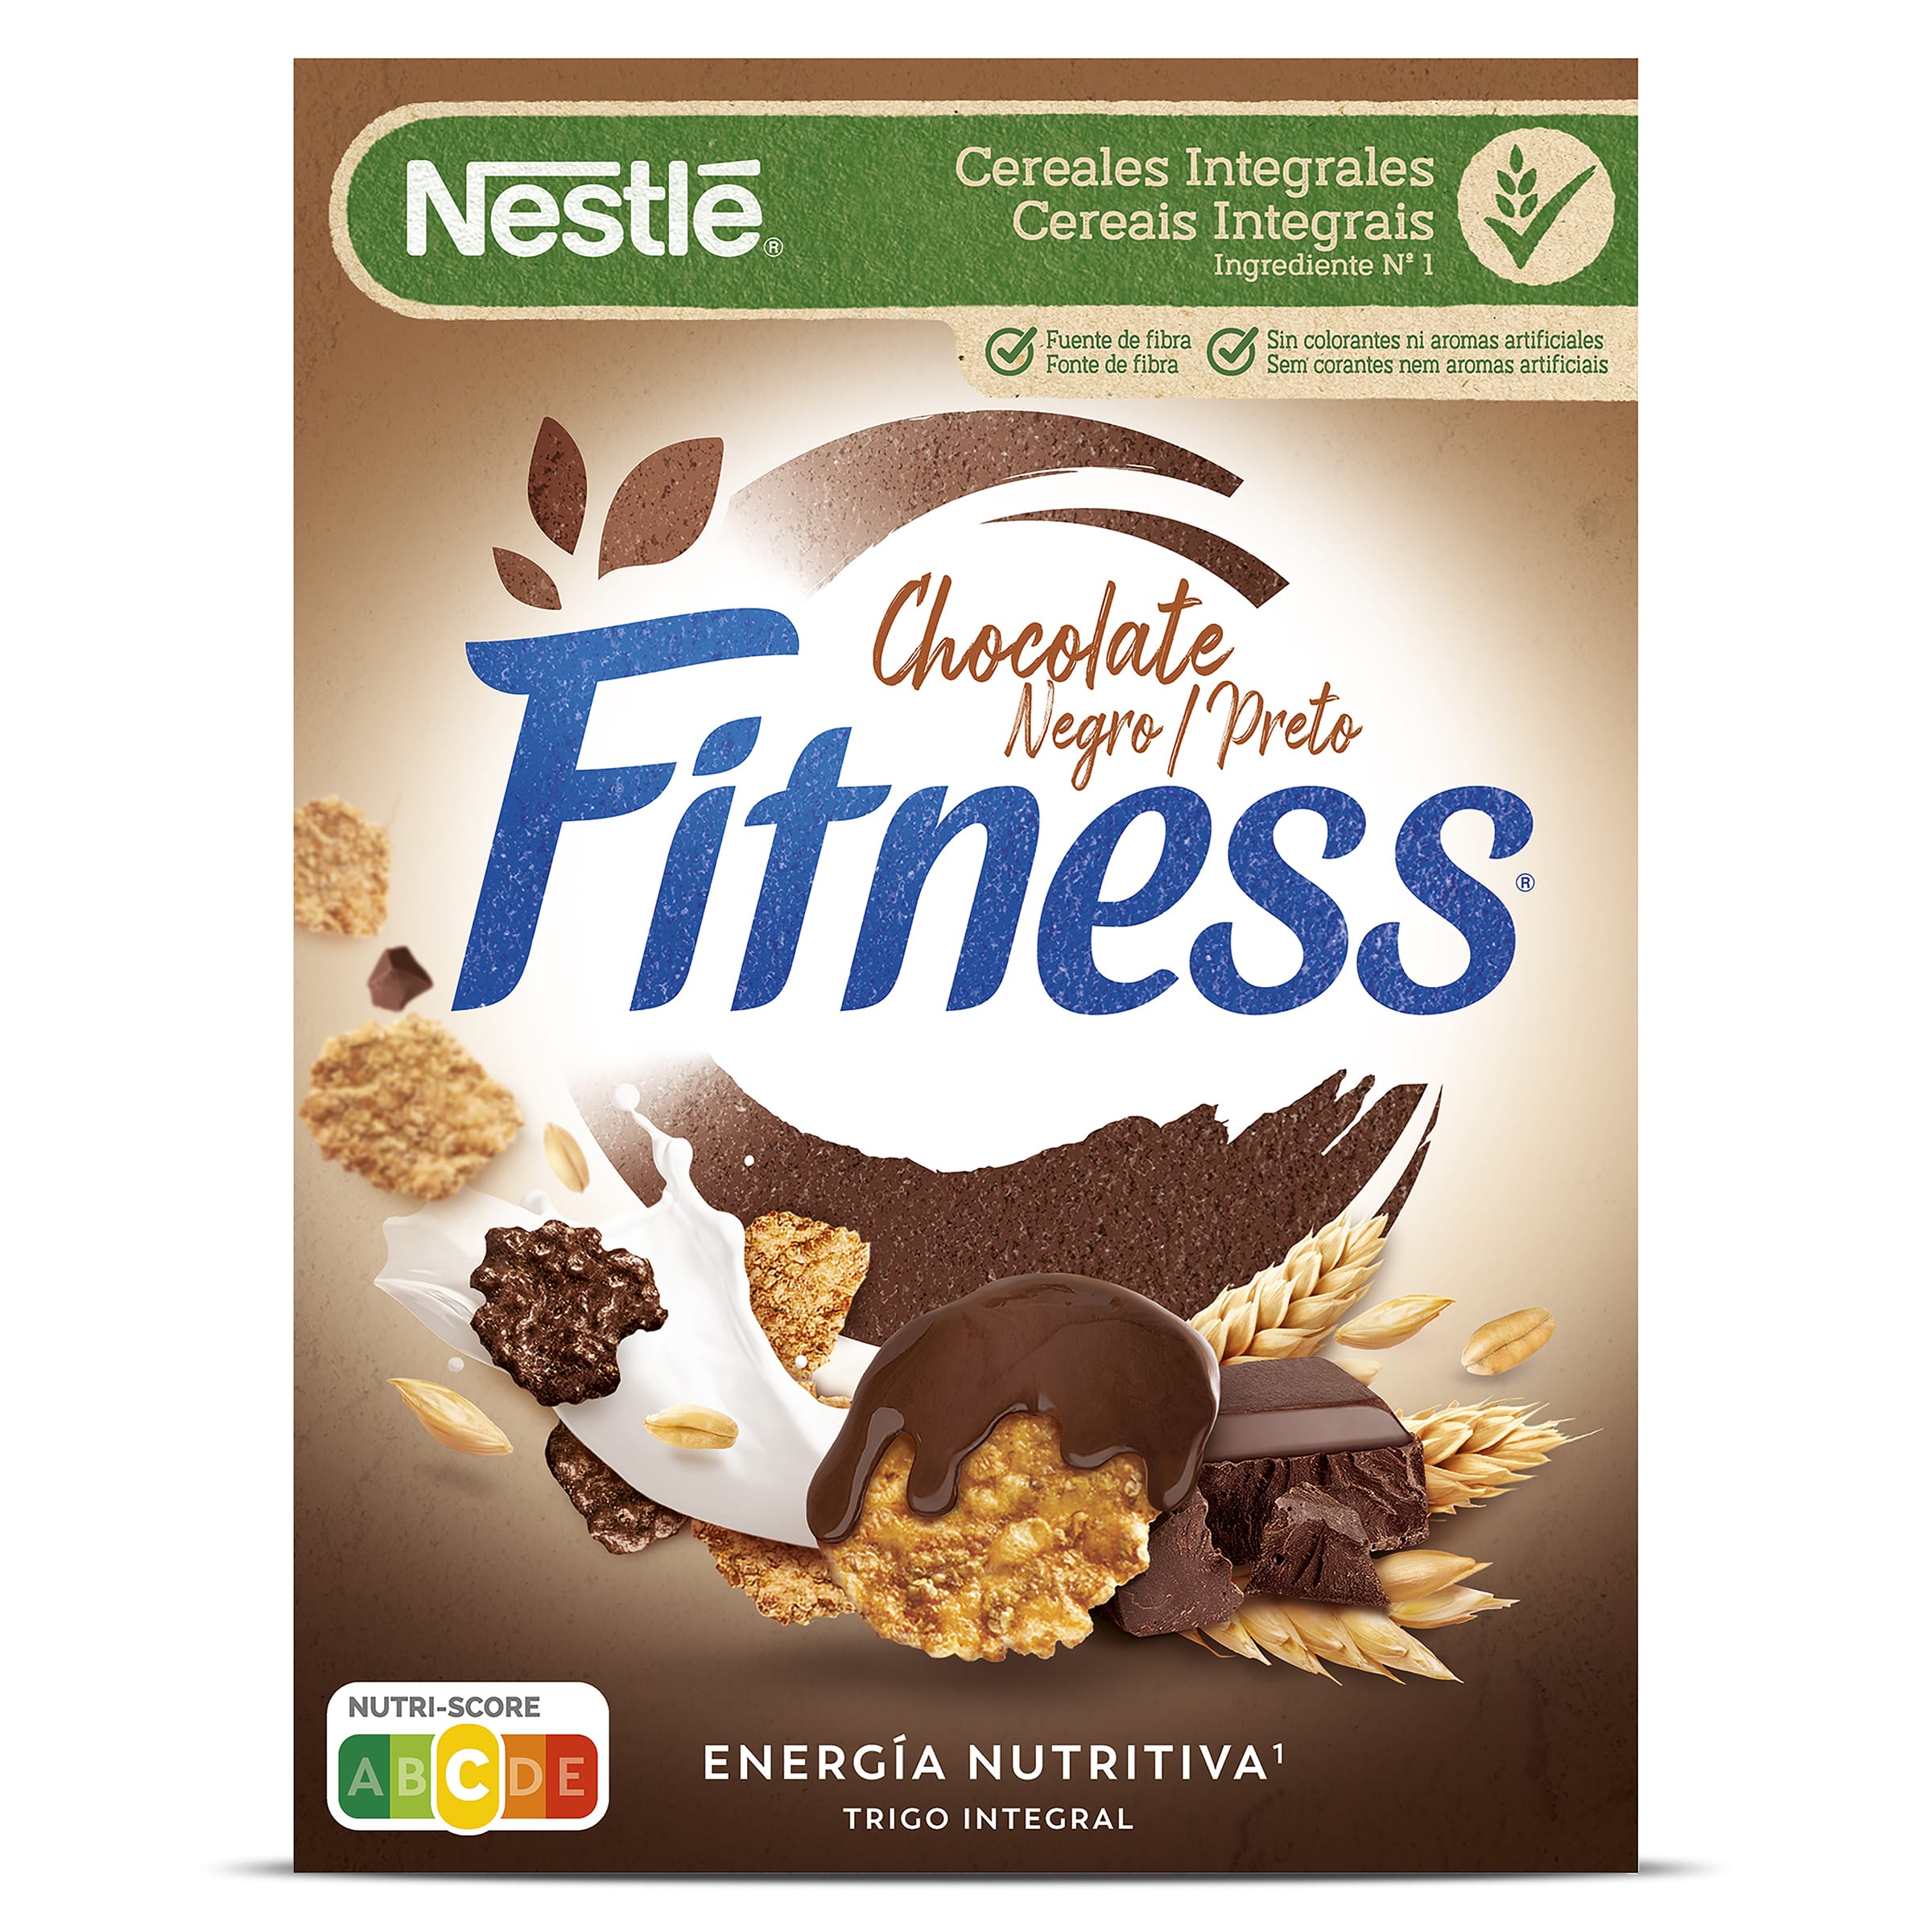 Cereales integrales con chocolate negro Nestlé Fitness caja 375 g -  Supermercados DIA